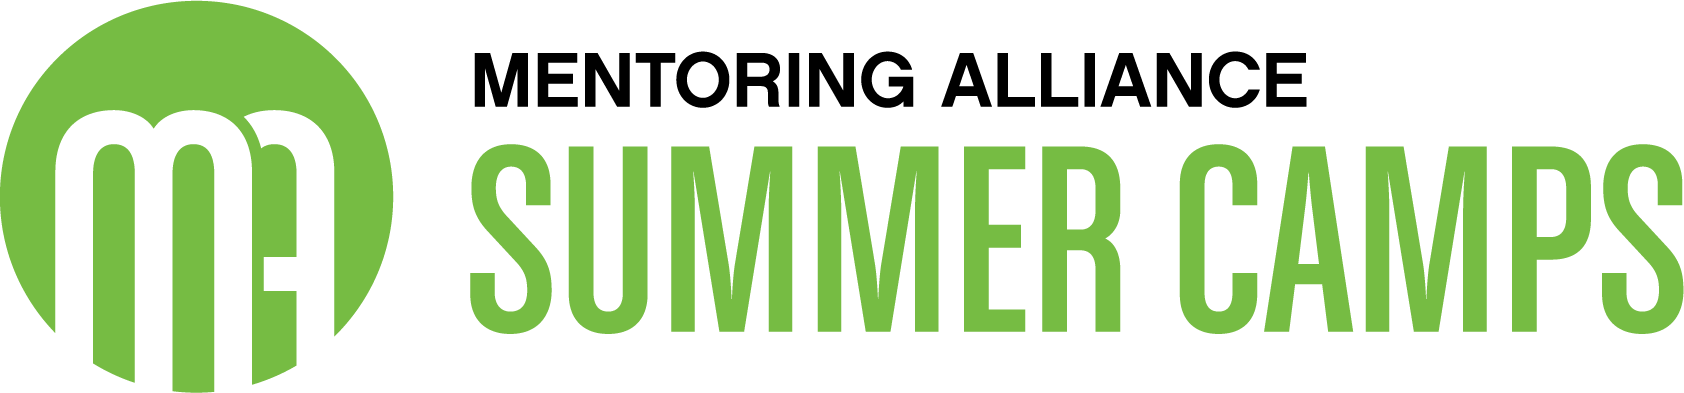 ma-summer-camps-logo-full-color-rgb (1)